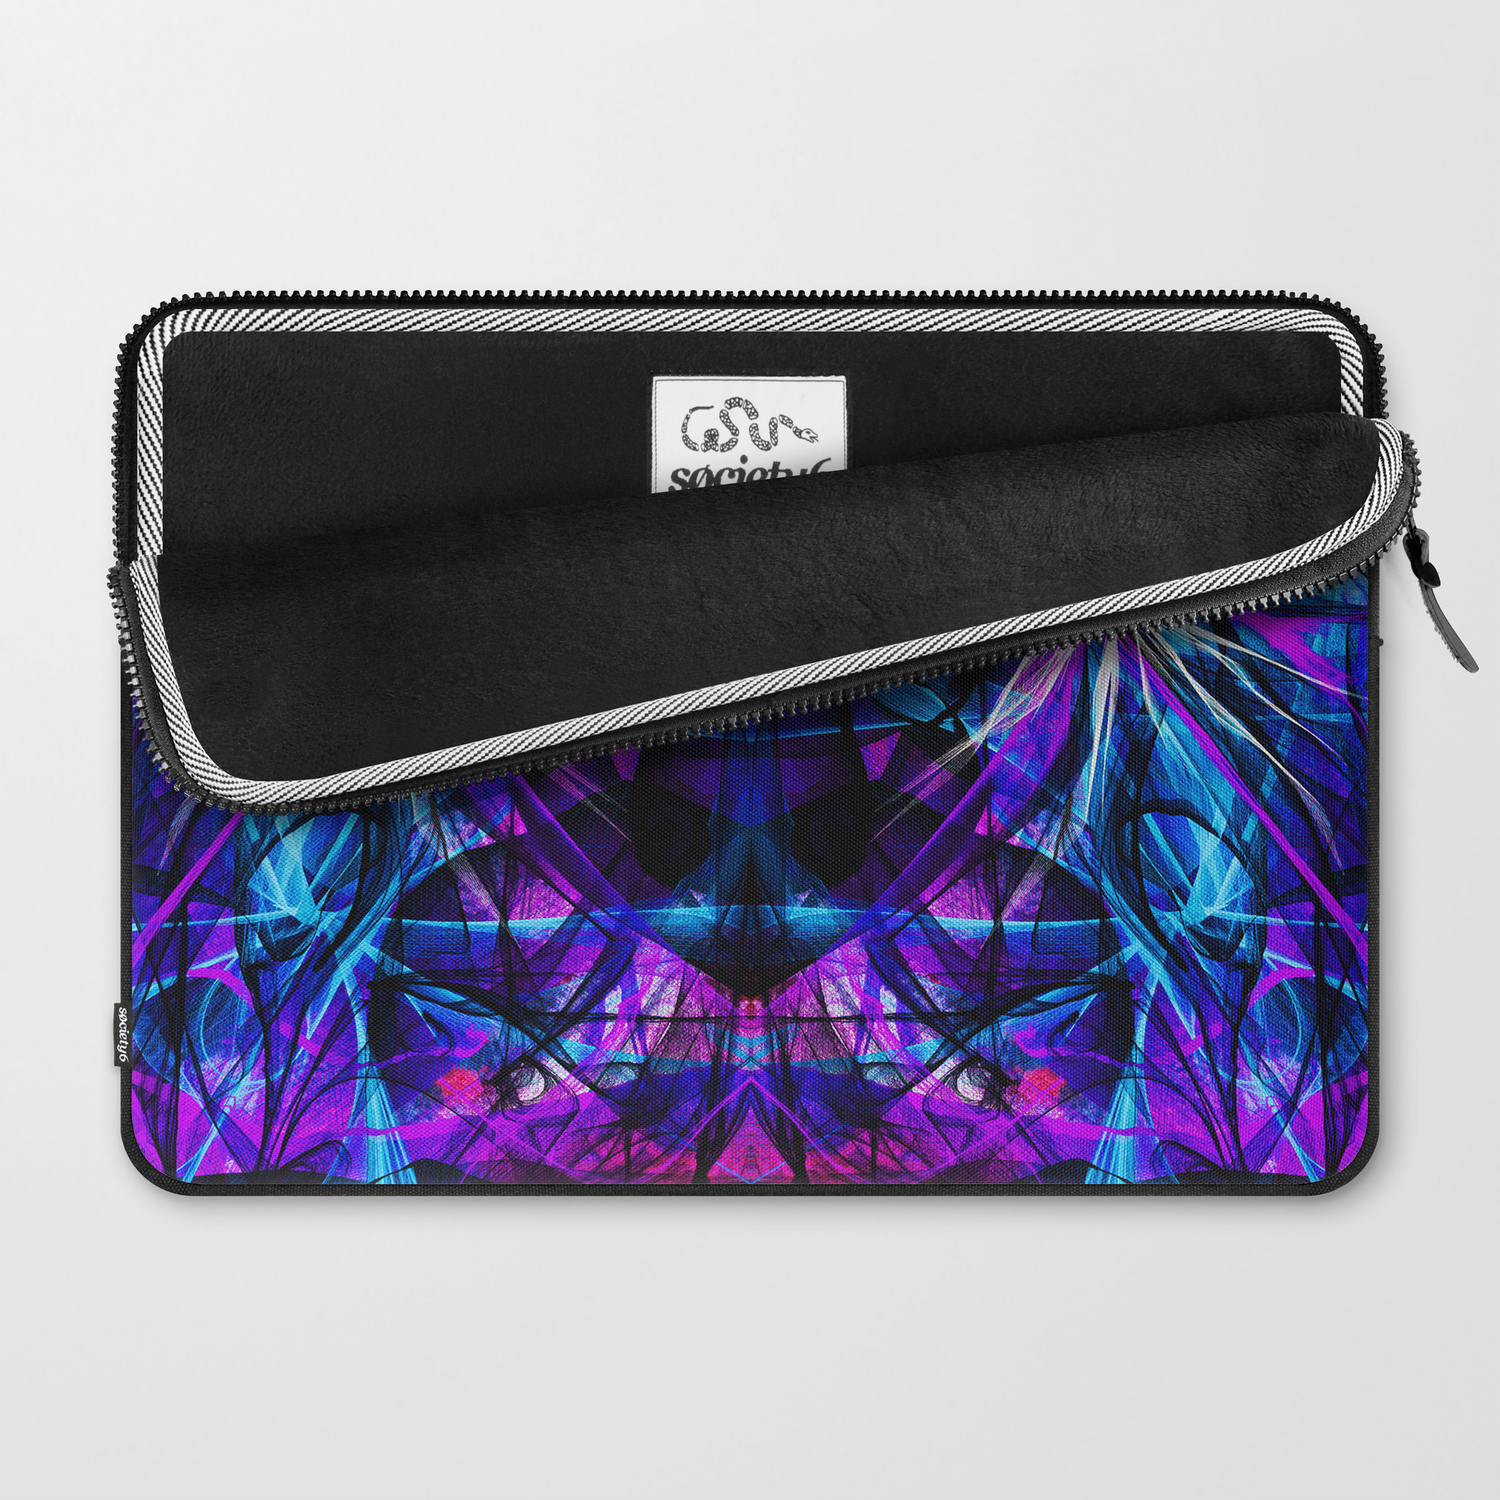 Zara Laptop Sleeve by nin147 | Society6